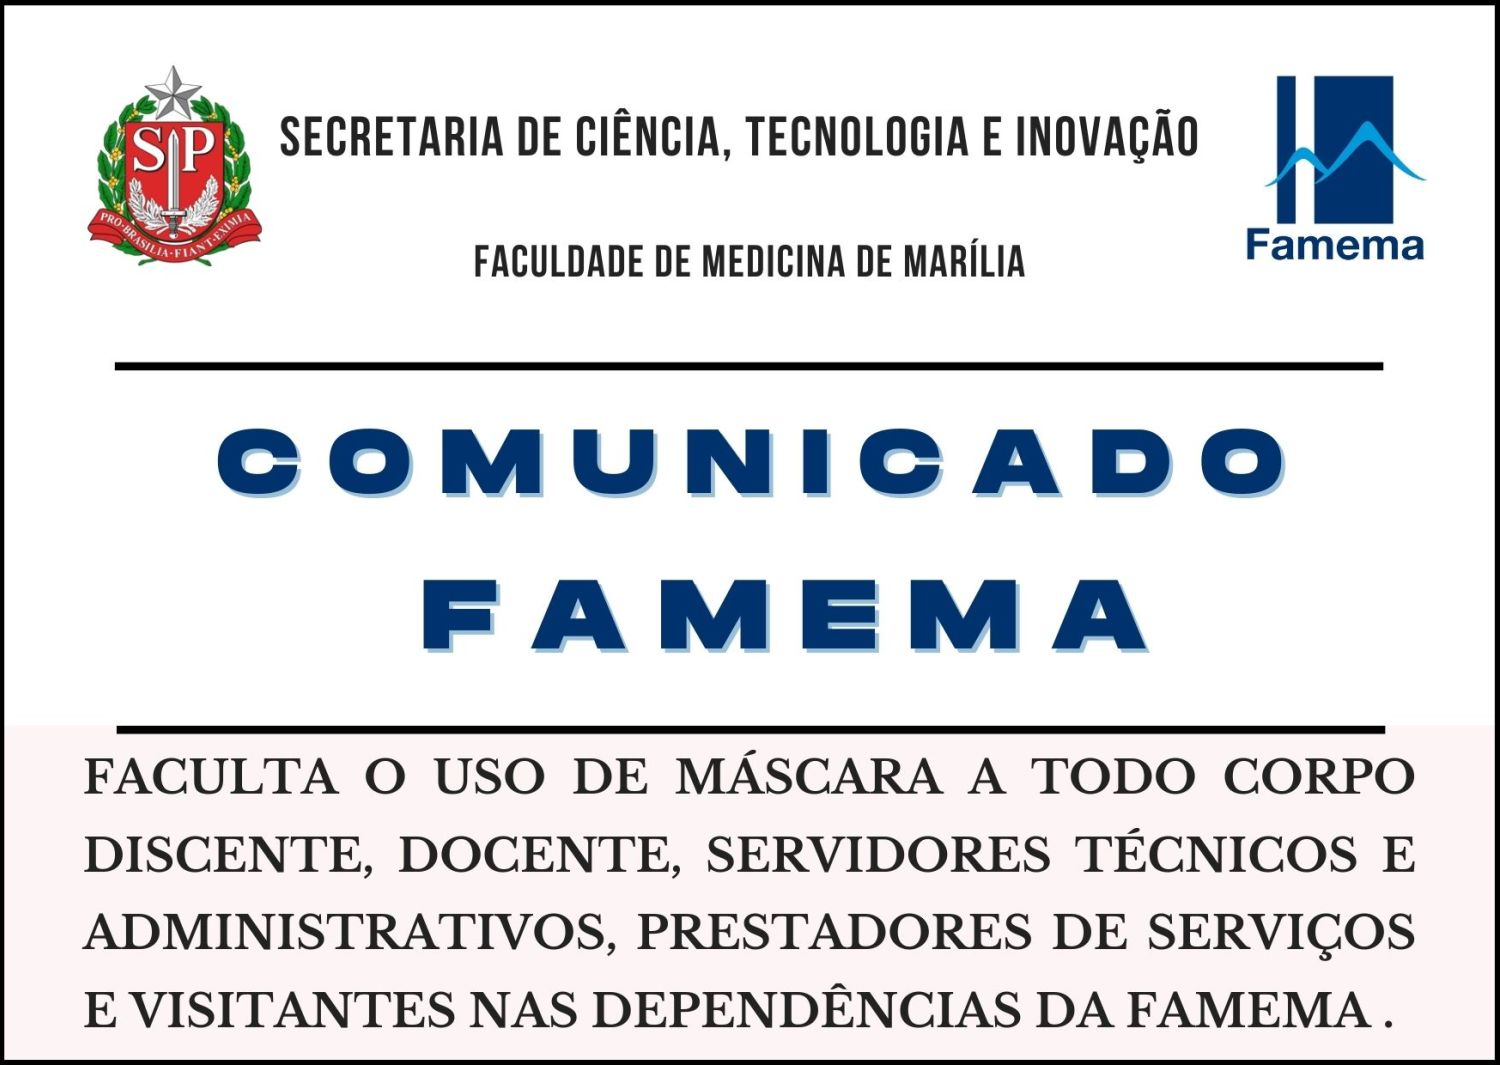 COMUNICADO FACULTA USO DE MÁSCARA NAS DEPENDÊNCIAS DA FAMEMA